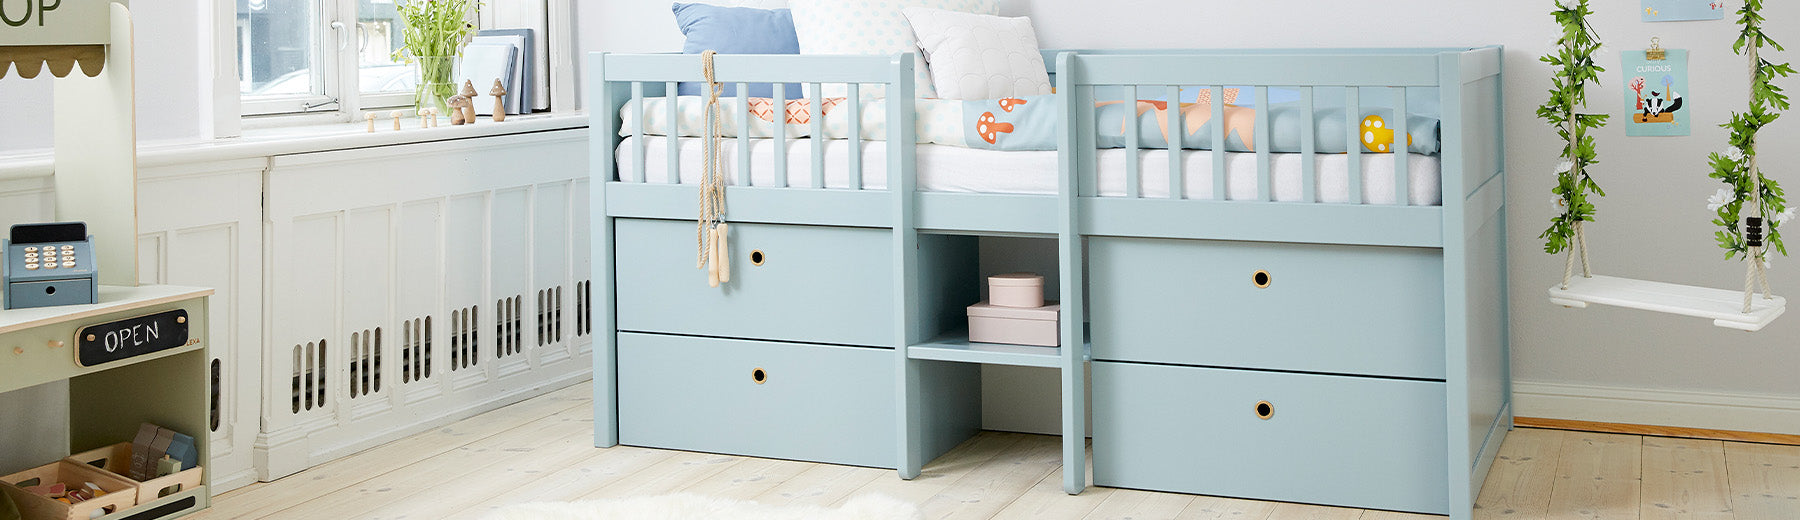 Groenteboer Oven Promoten Kids' Beds with Storage| Beds with Drawers | FLEXA Freja